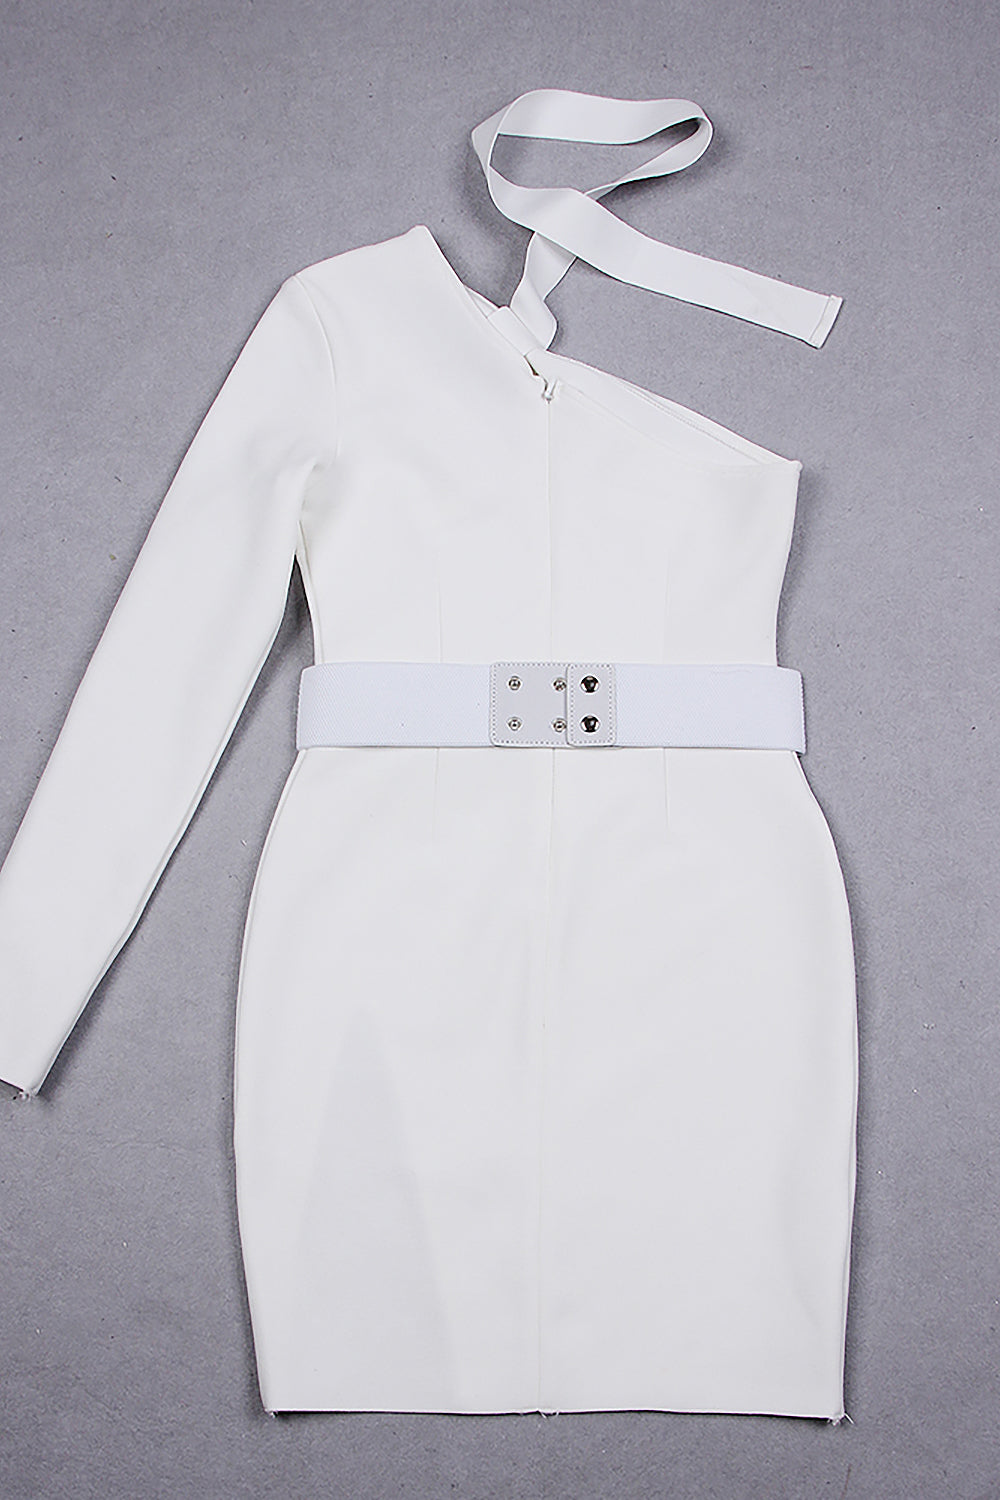 One Shoulder Long Sleeve Crystal Belt Mini Bandage Dress In Black White - Chicida